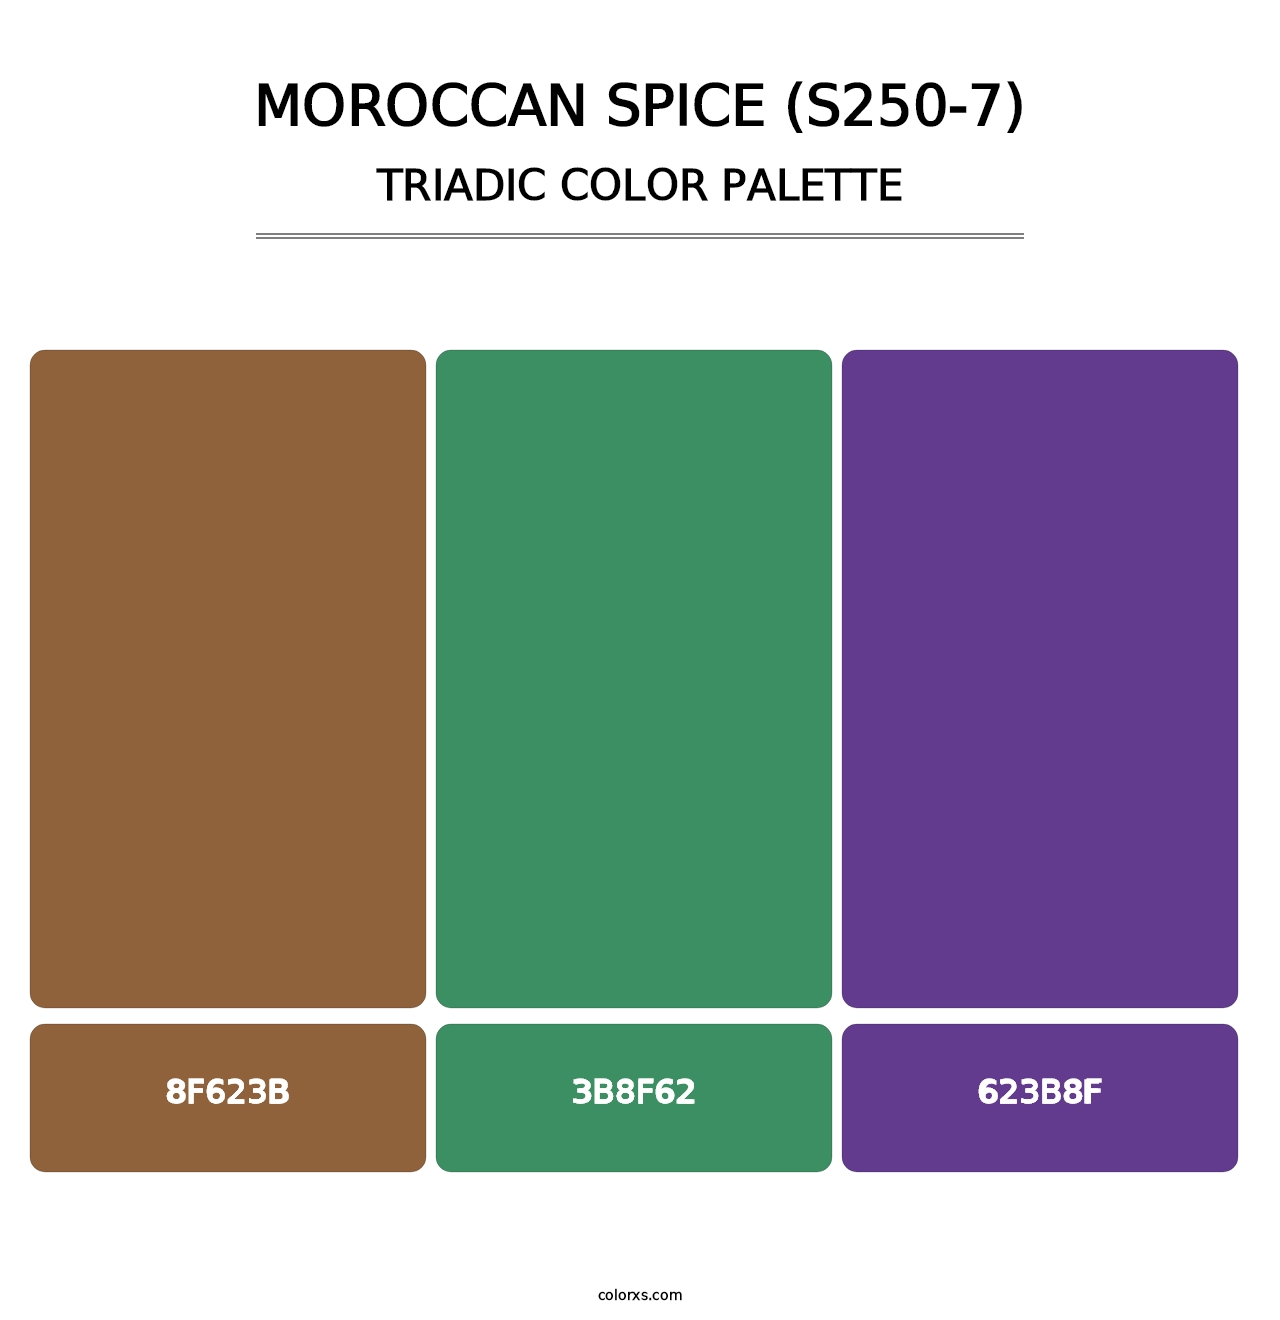 Moroccan Spice (S250-7) - Triadic Color Palette